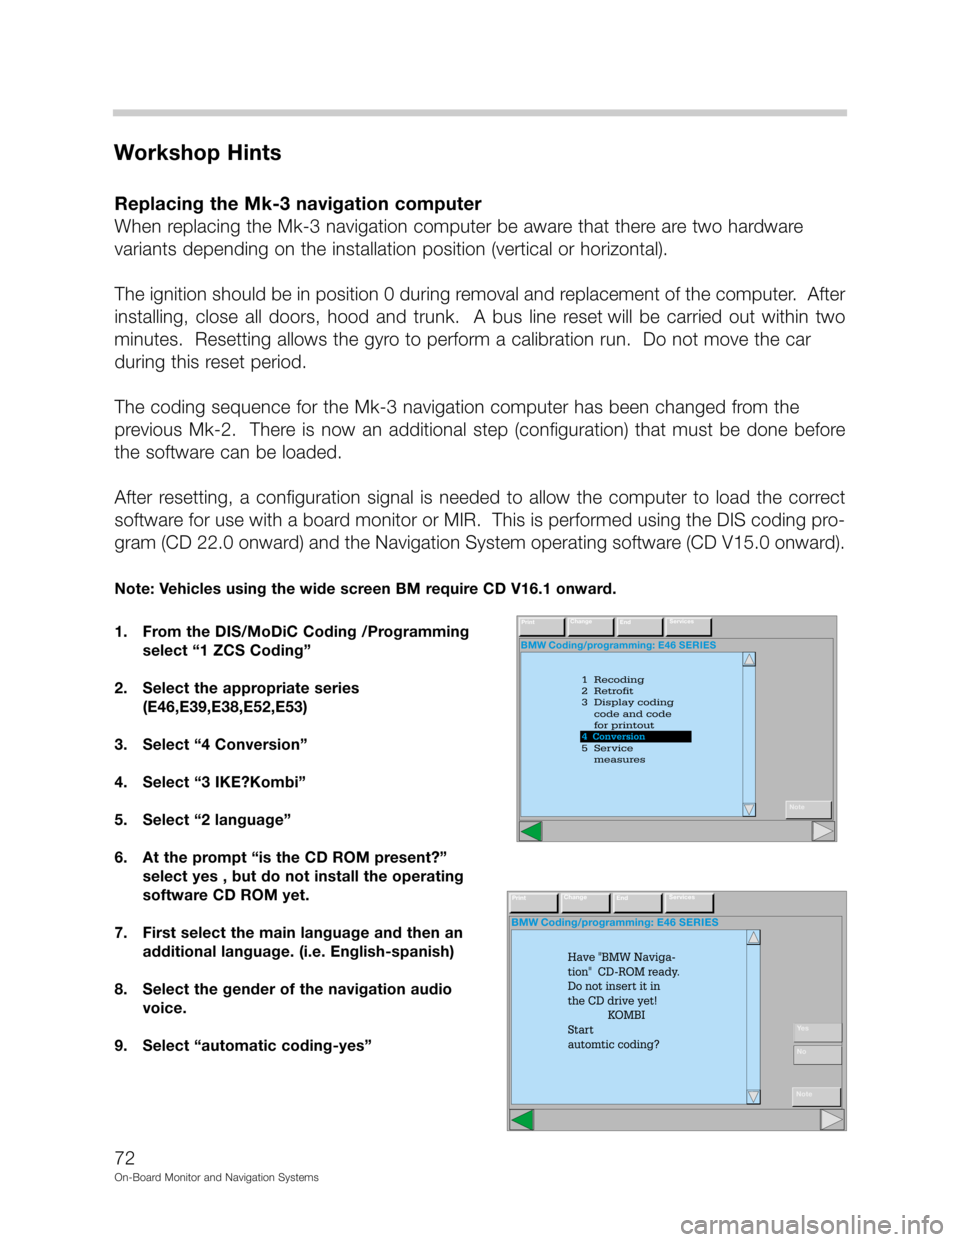 BMW X5 2001 E53 On Board Monitor System Manual PDF ,



"&
(	
@0&/: !
/" !1&	0!", 1" !./
B


9.
&
	
%%%
&




